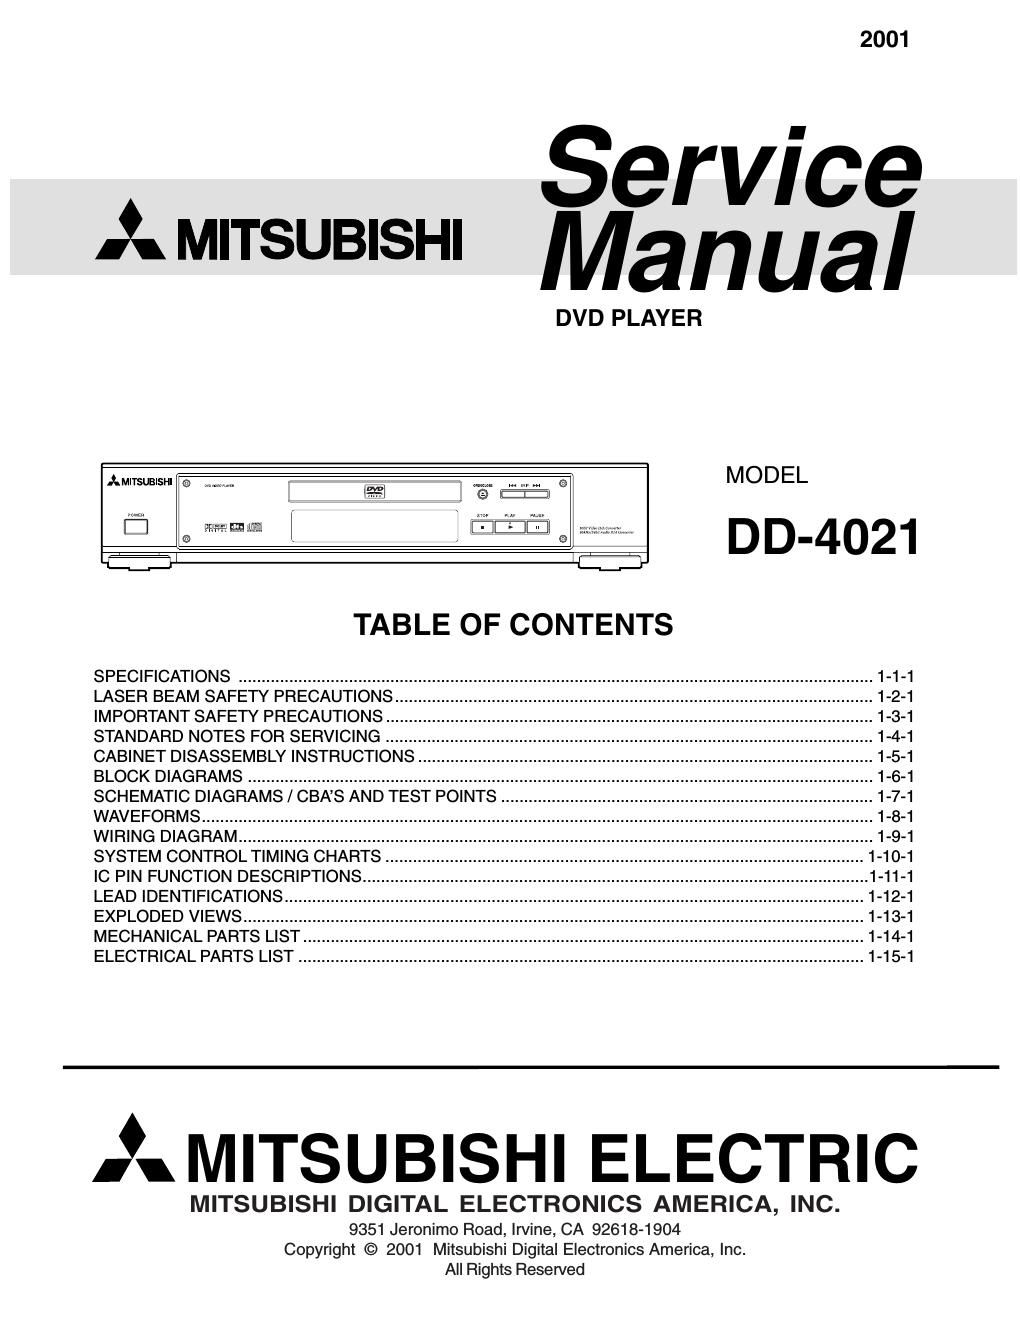 mitsubishi dd 4021 service manual